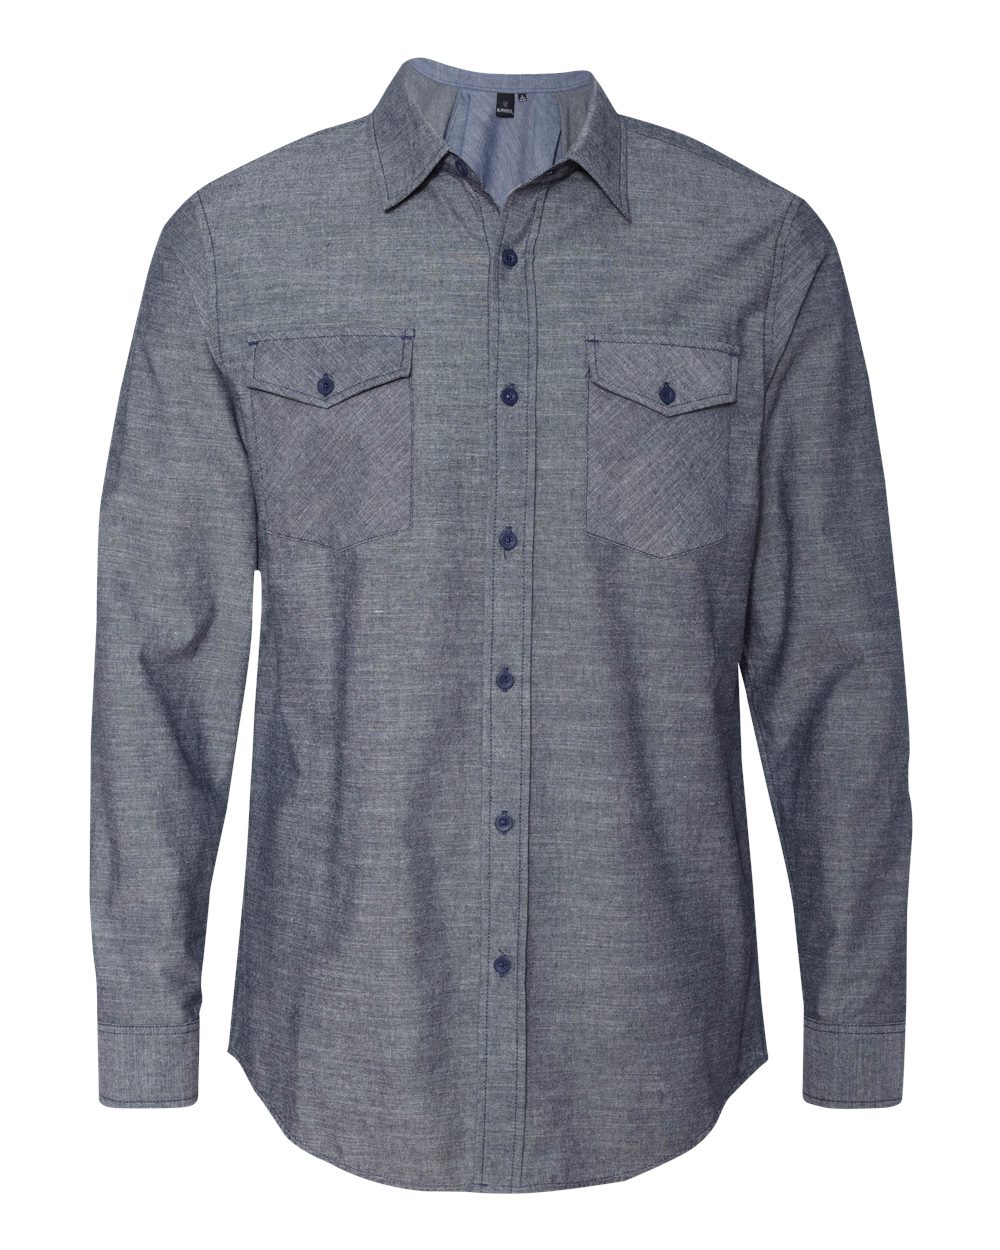 Burnside 8255 - Chambray Long Sleeve Shirt